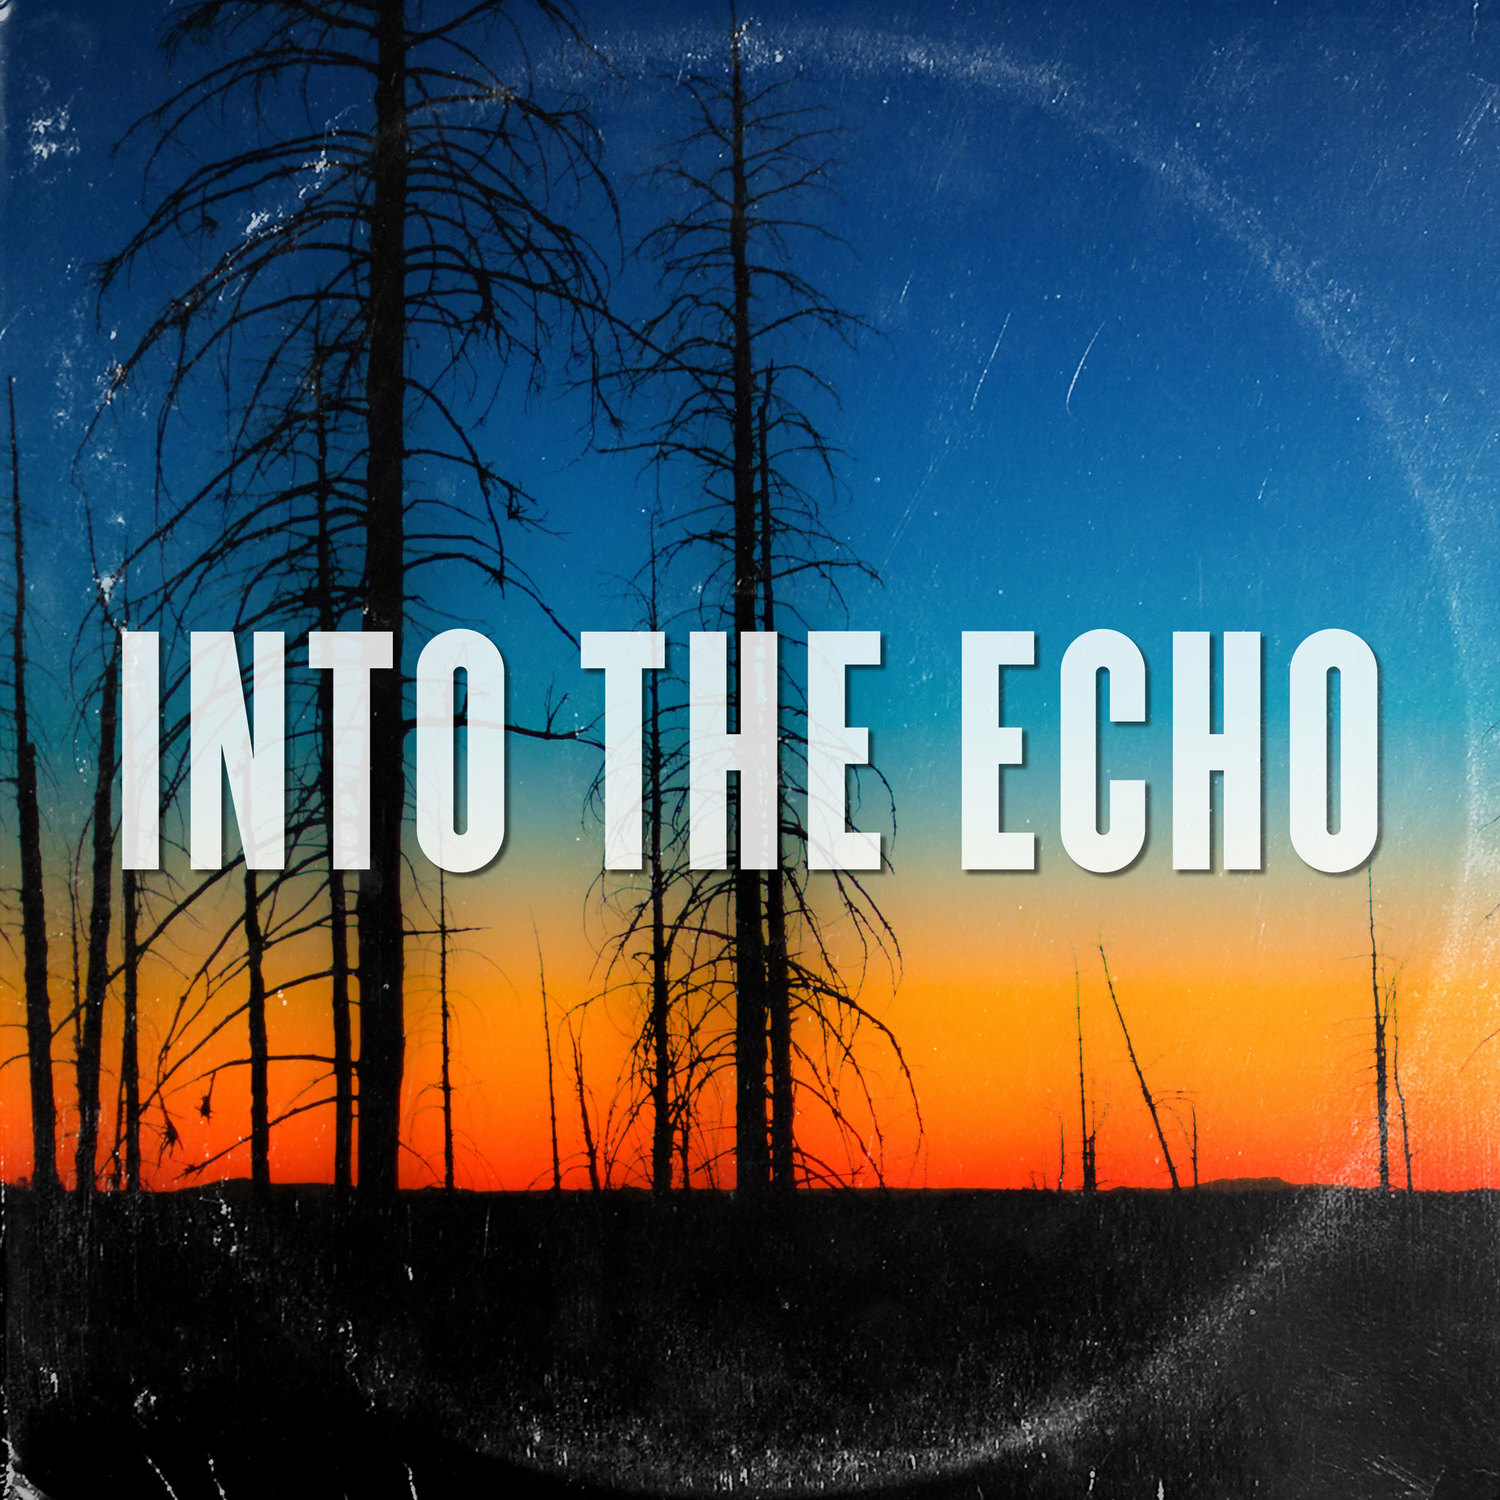 Into the Echo